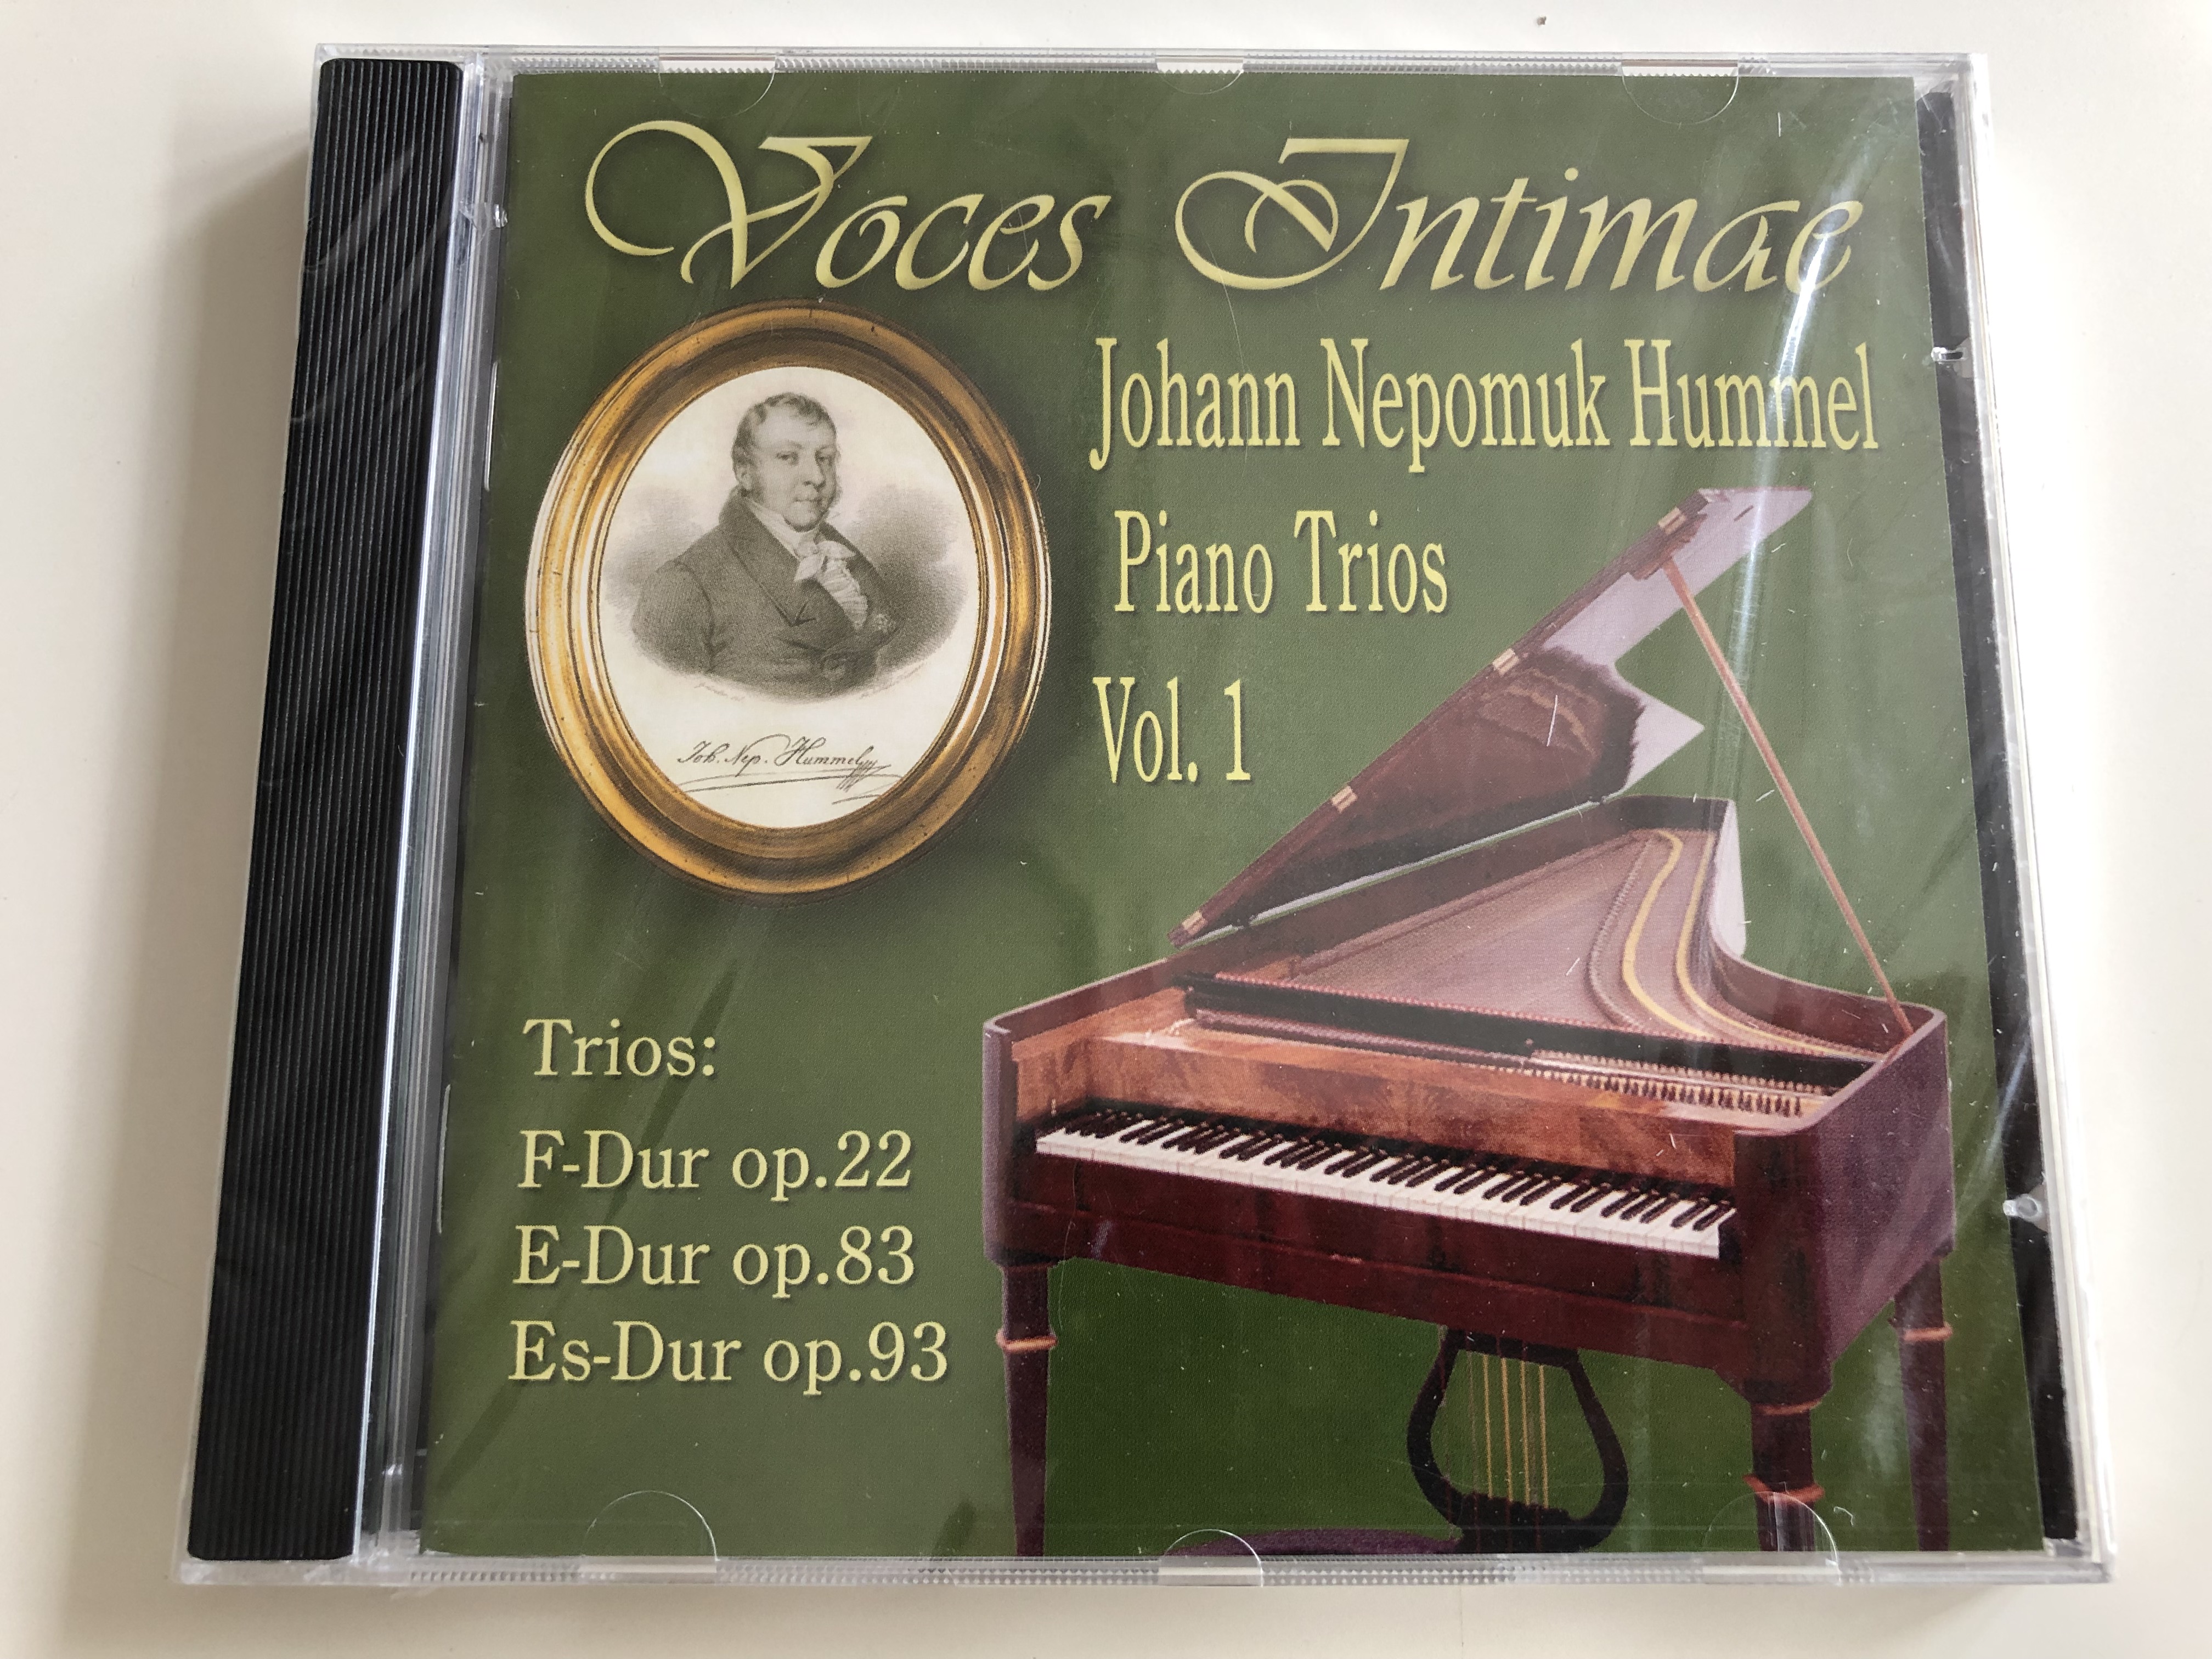 voces-intimae-johann-nepomuk-hummel-piano-trios-vol.-1-trios-f-dur-op-22-e-dur-op.-83-es-dur-op.93-audio-cd-2004-cth-2510-1-.jpg